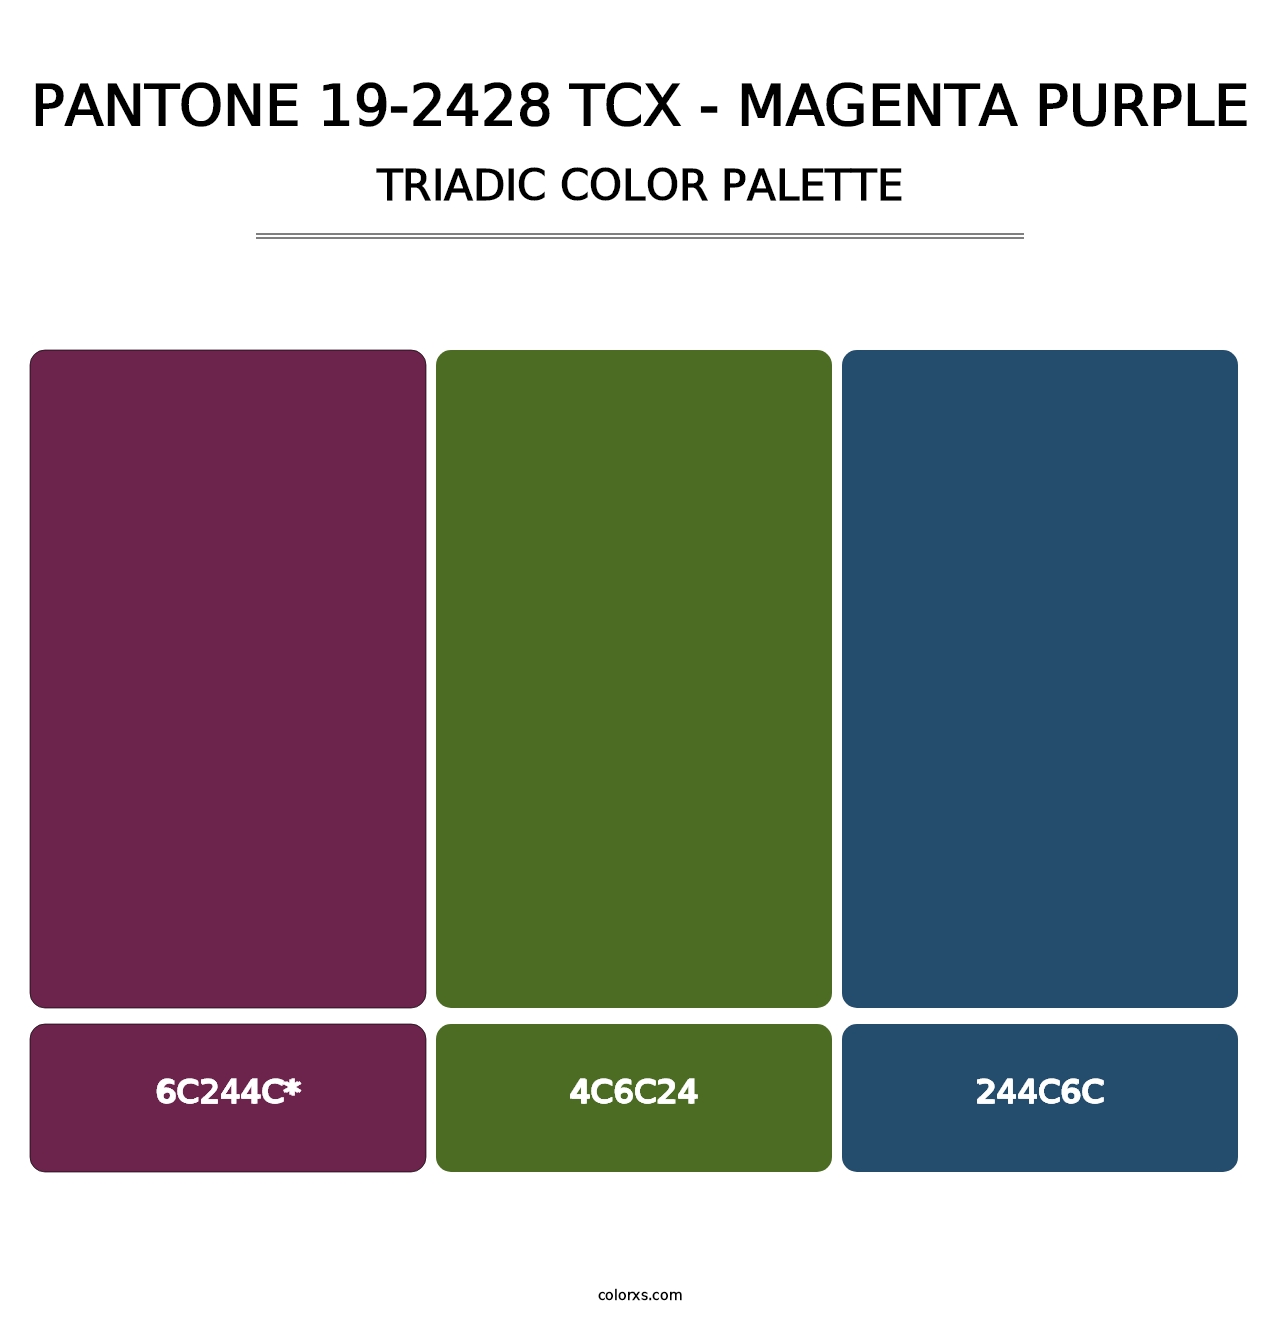 PANTONE 19-2428 TCX - Magenta Purple - Triadic Color Palette